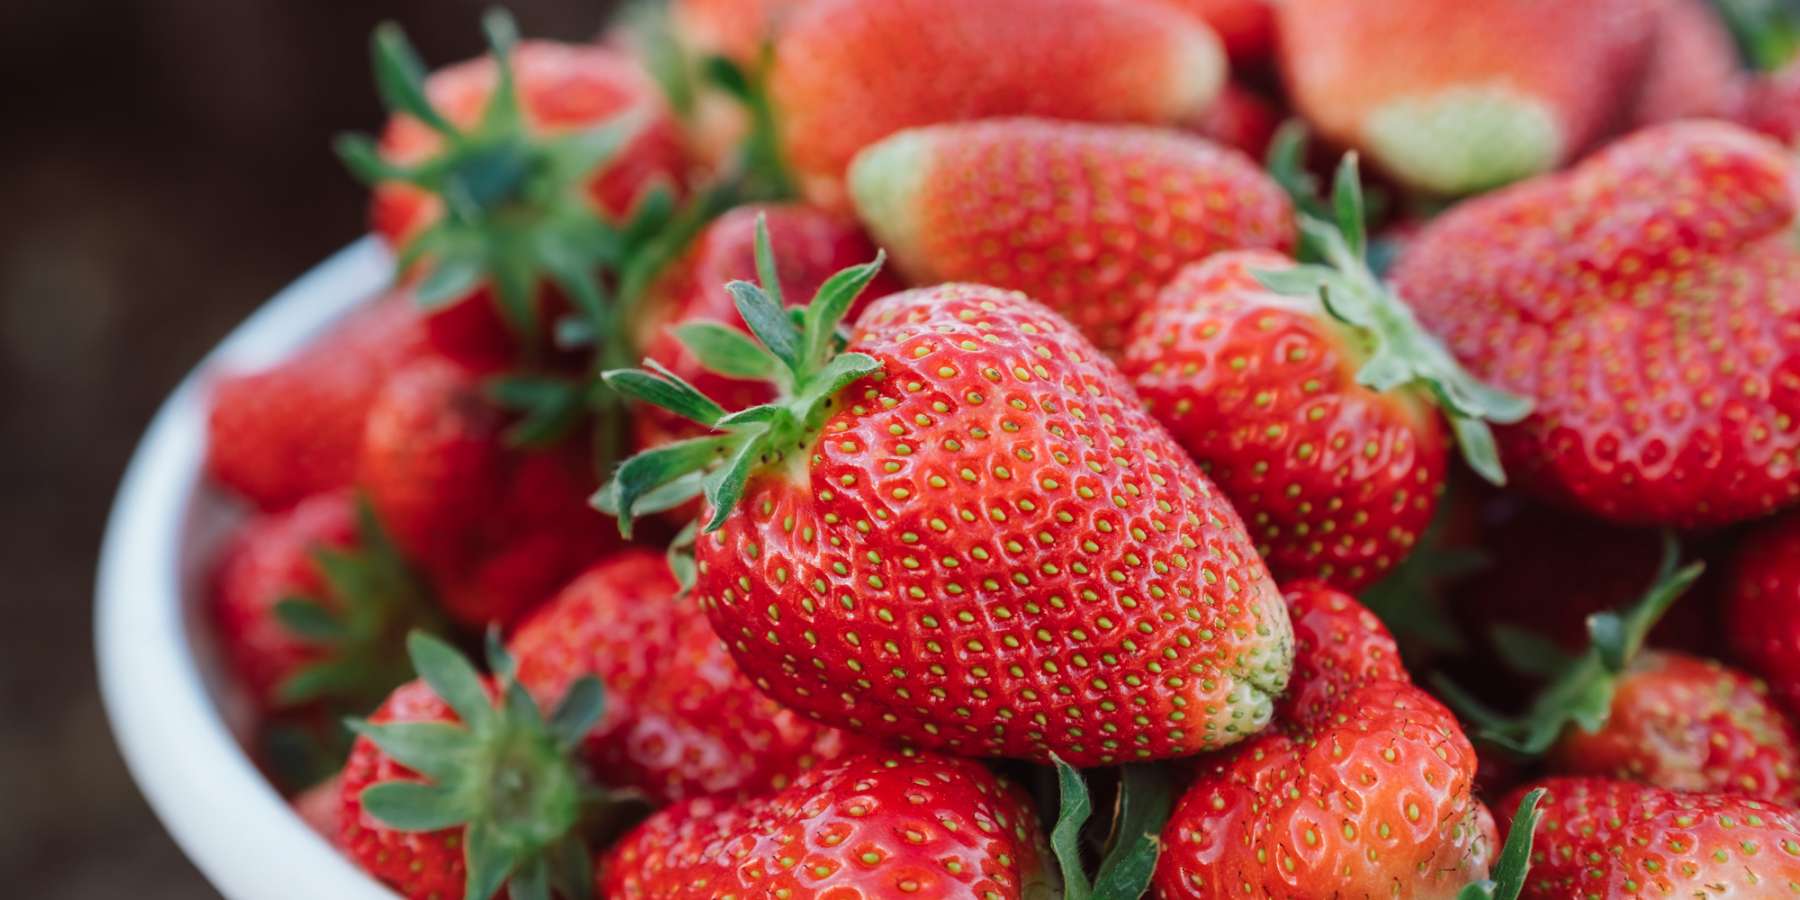 Strawberries @ Yoders' Farm